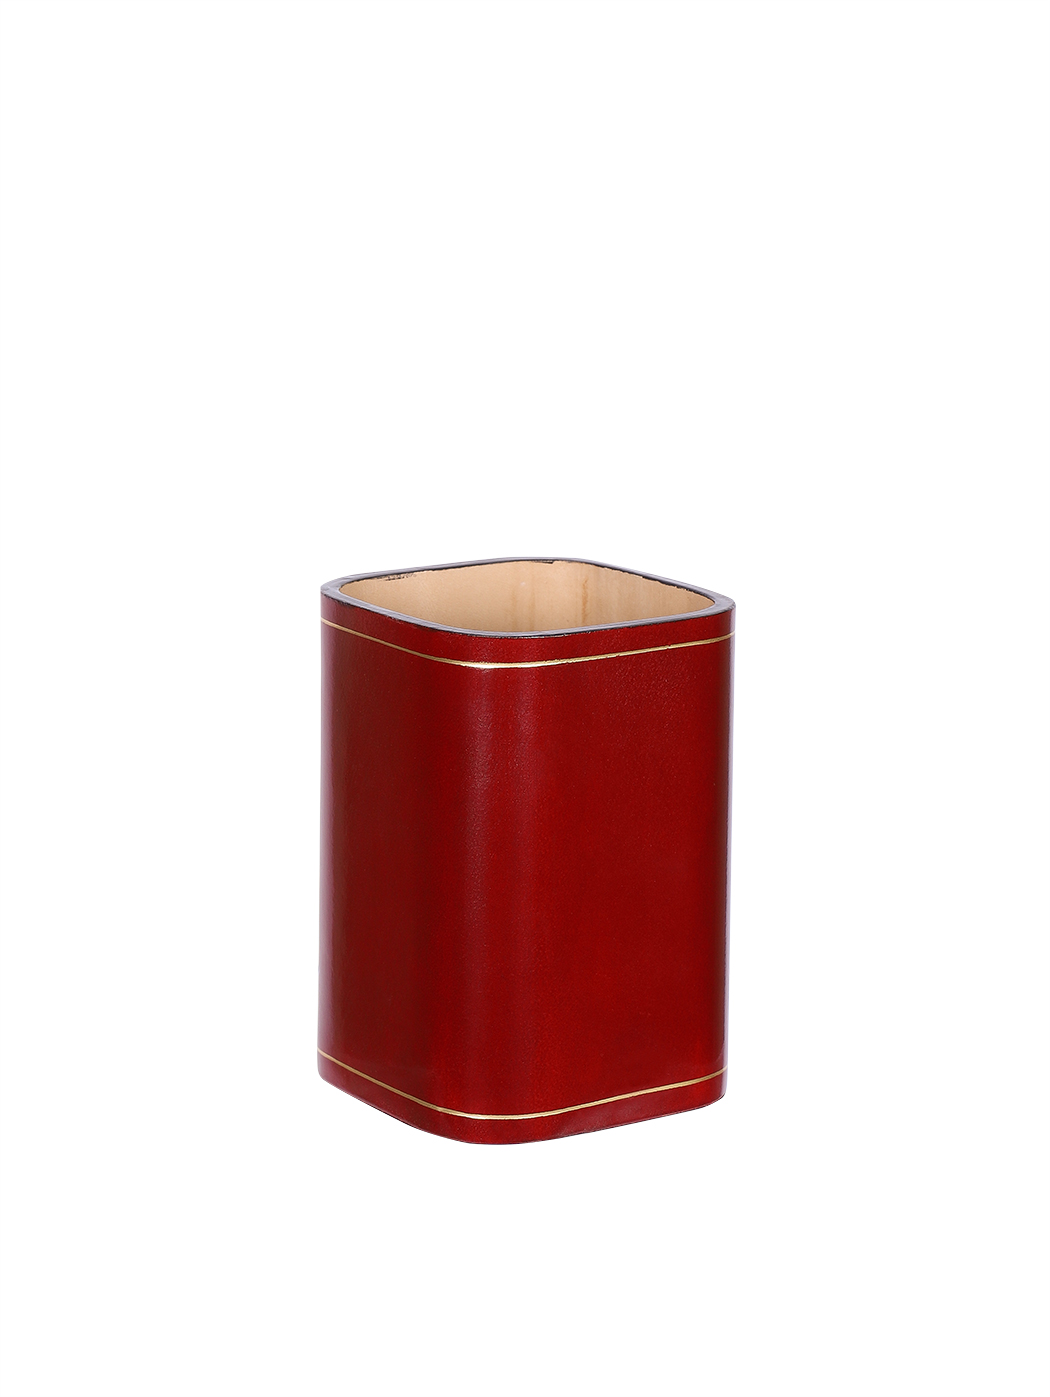 Pen Holder Desk Cup Leather Red